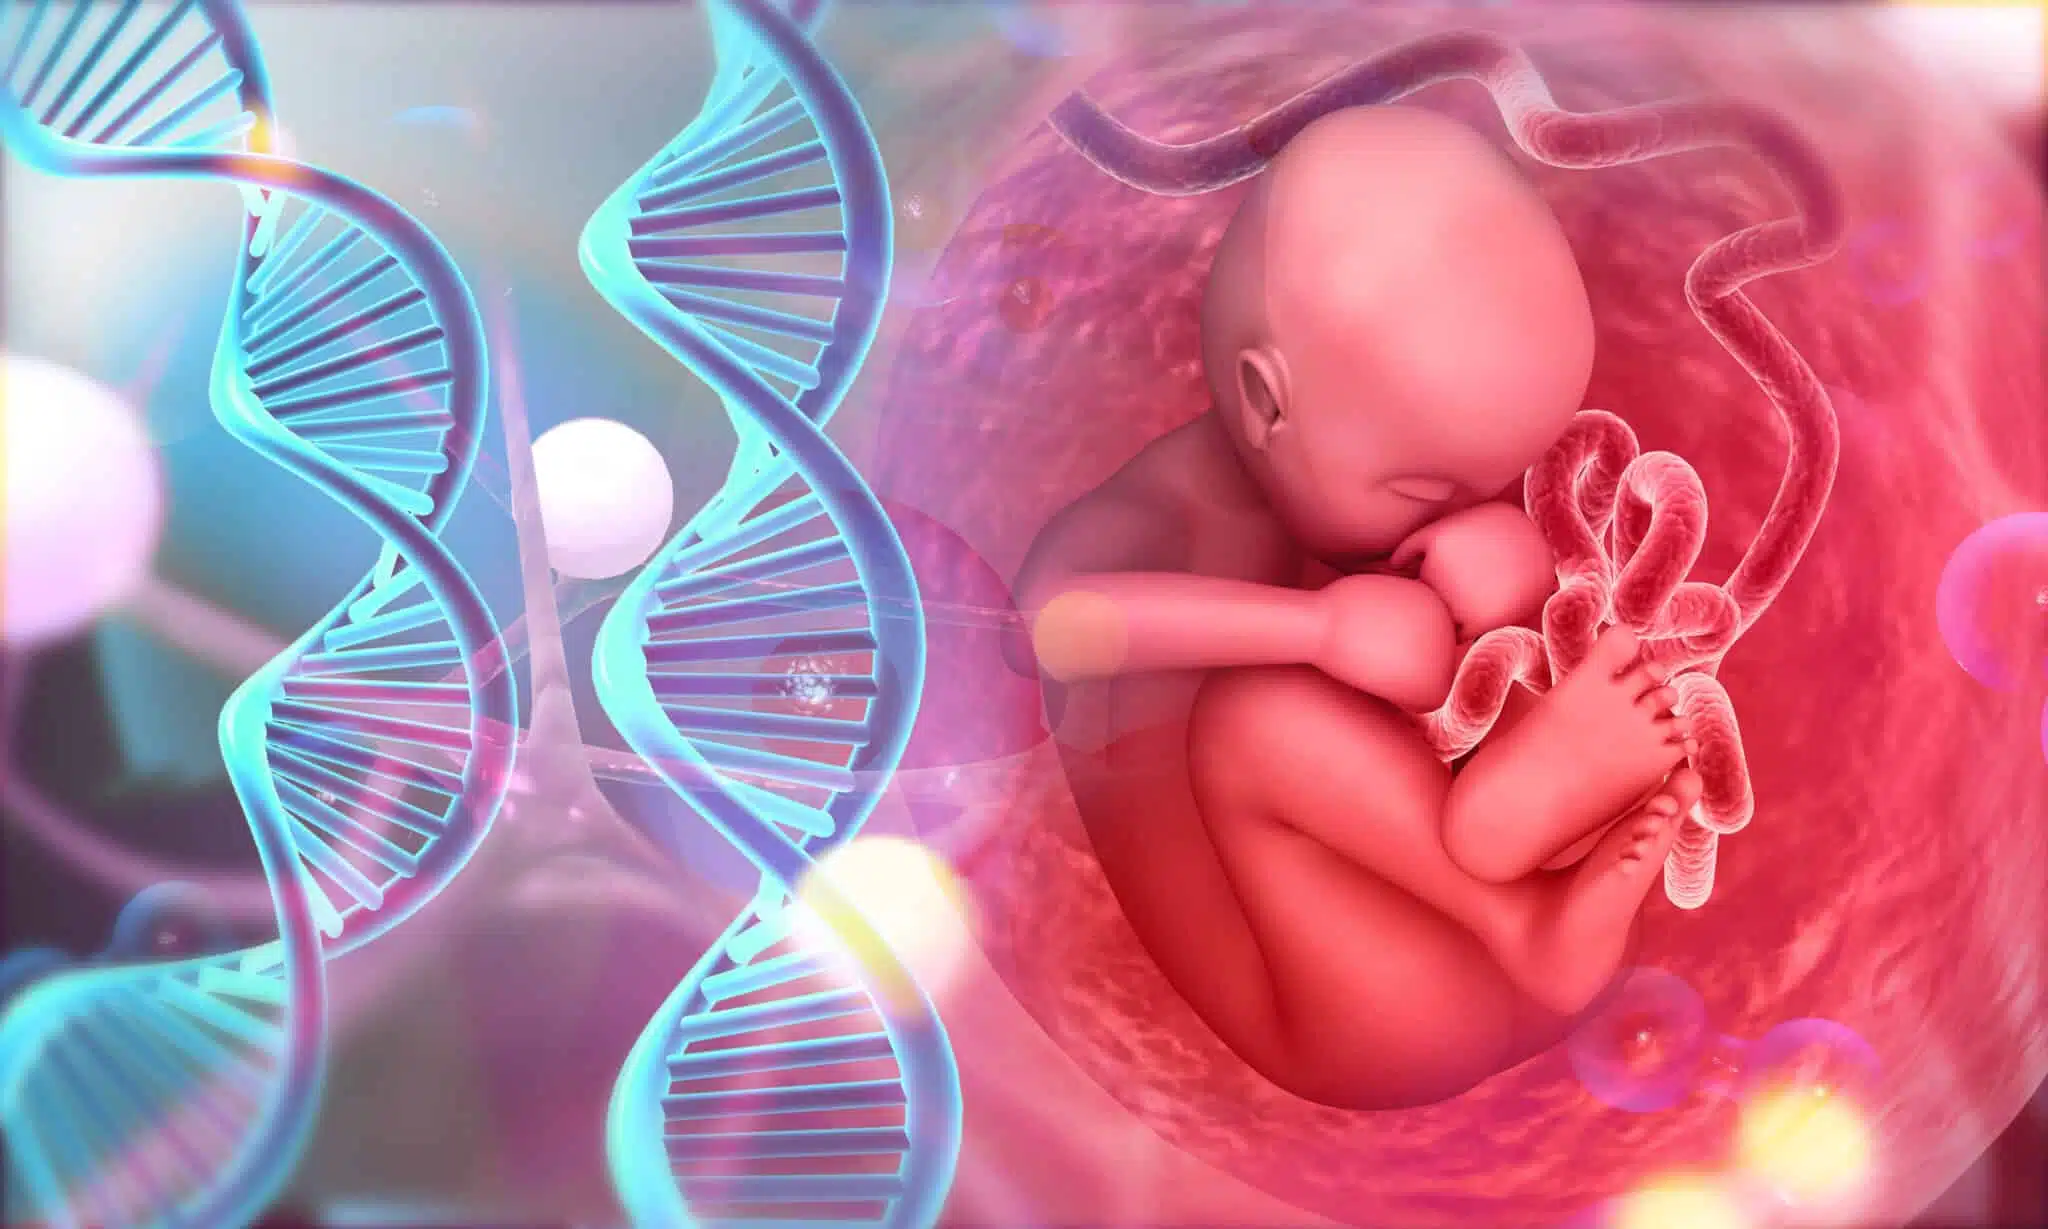 Human fetus with DNA strand. Medical concept. 3d illustration